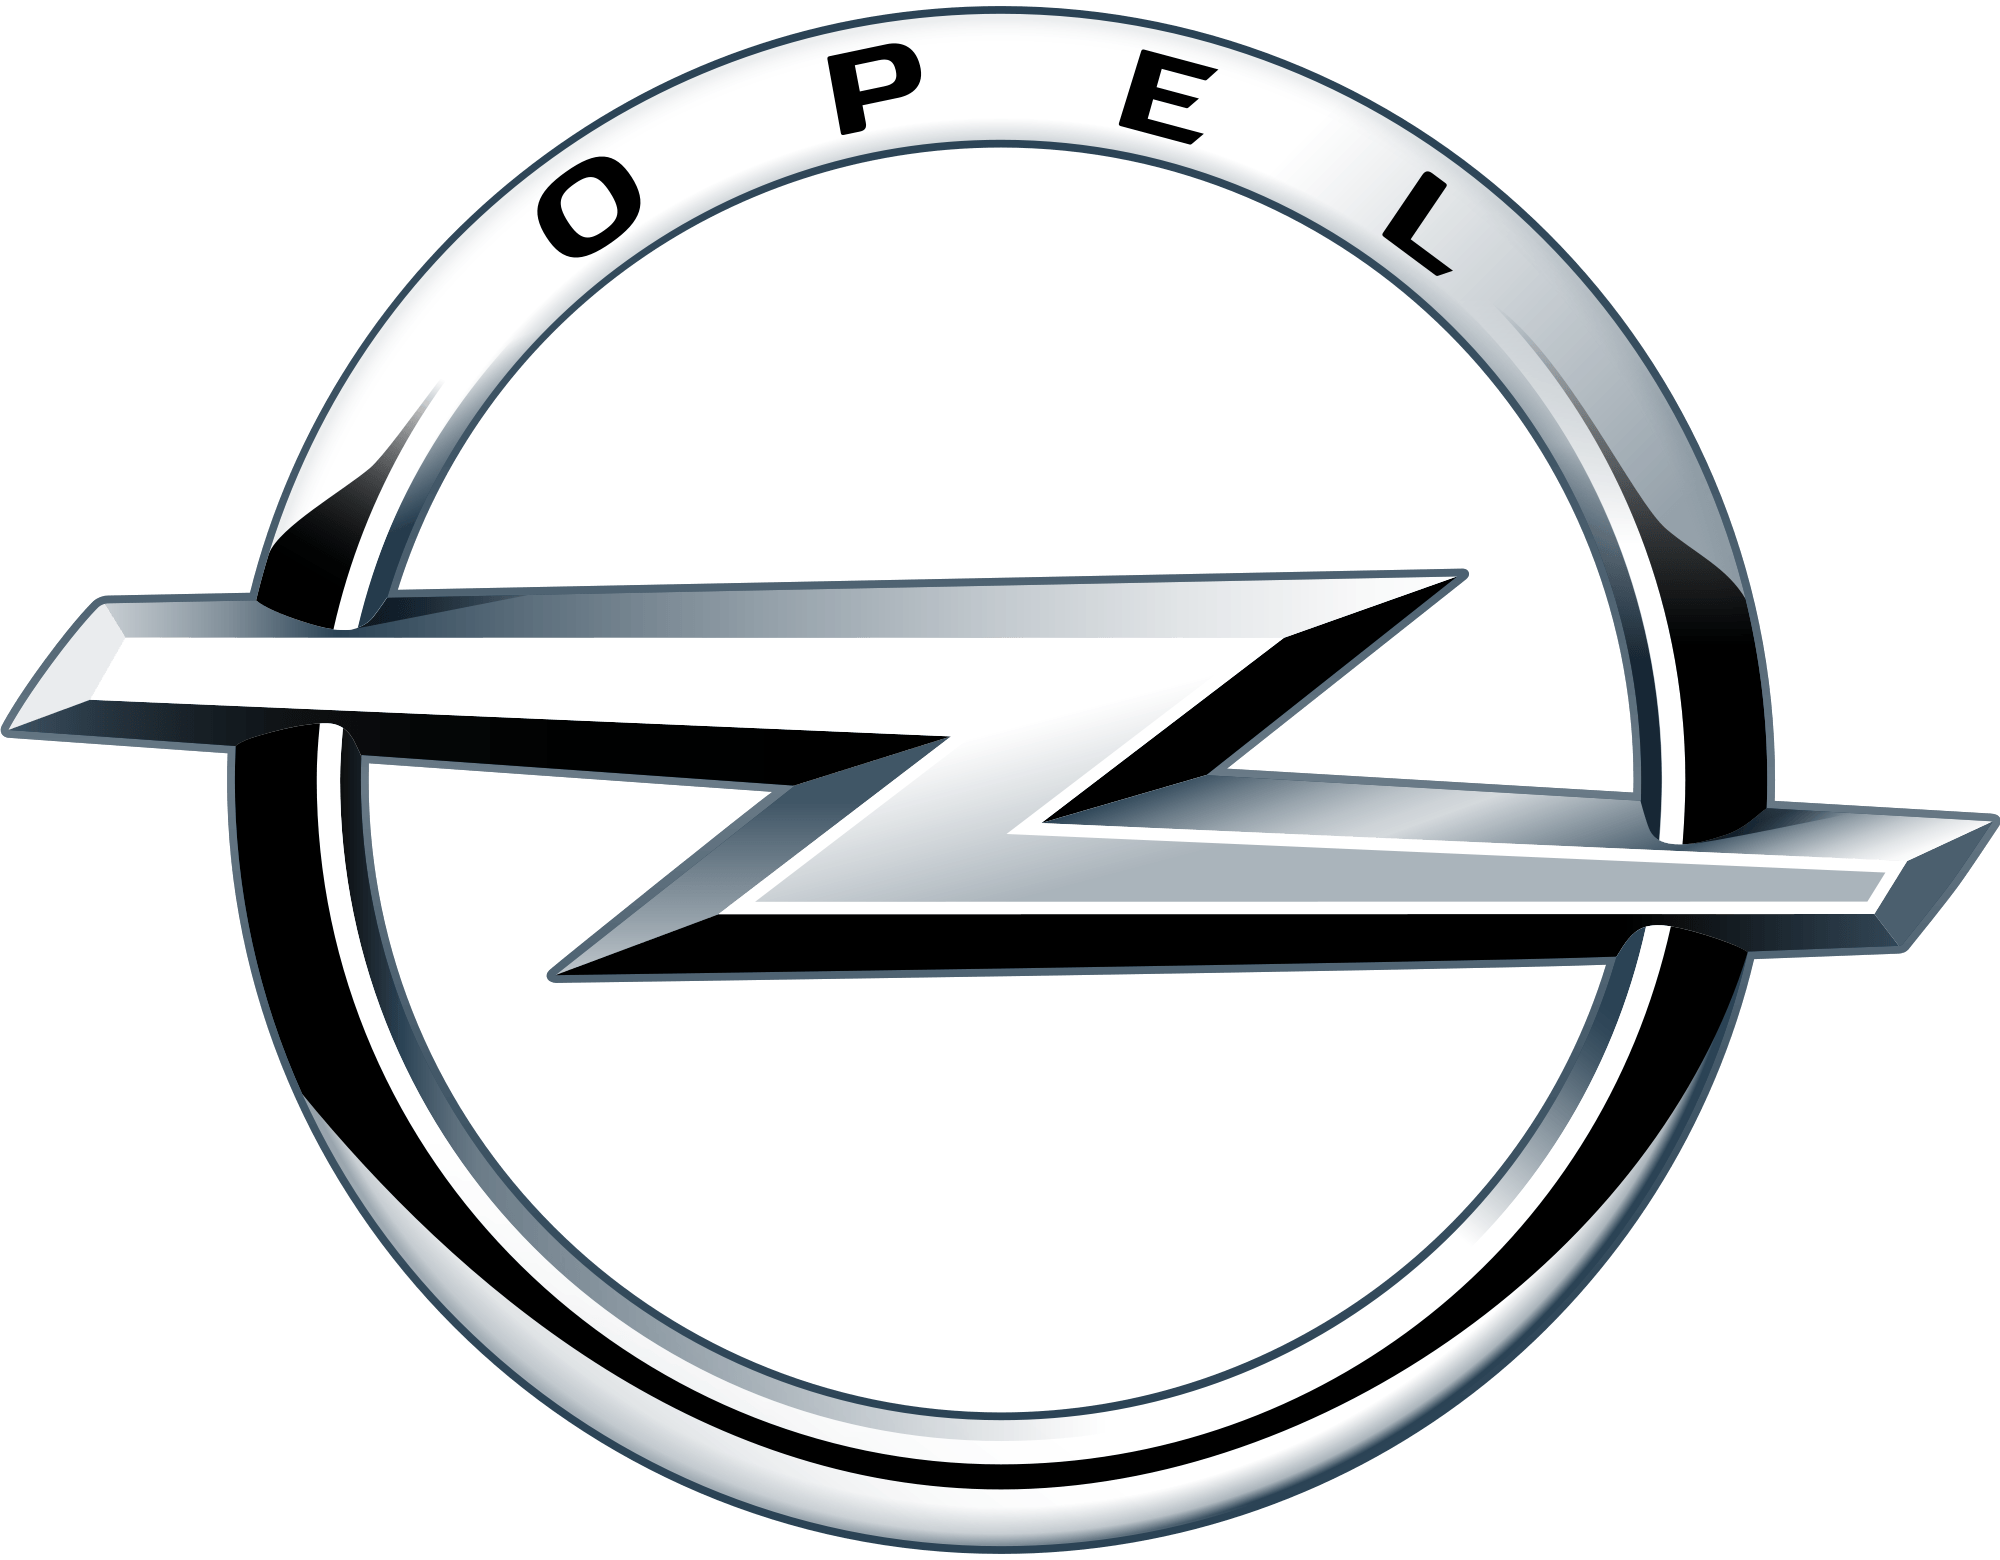 German Sports Brand Logo - German Car Brands, Companies and Manufacturers | Car Brand Names.com